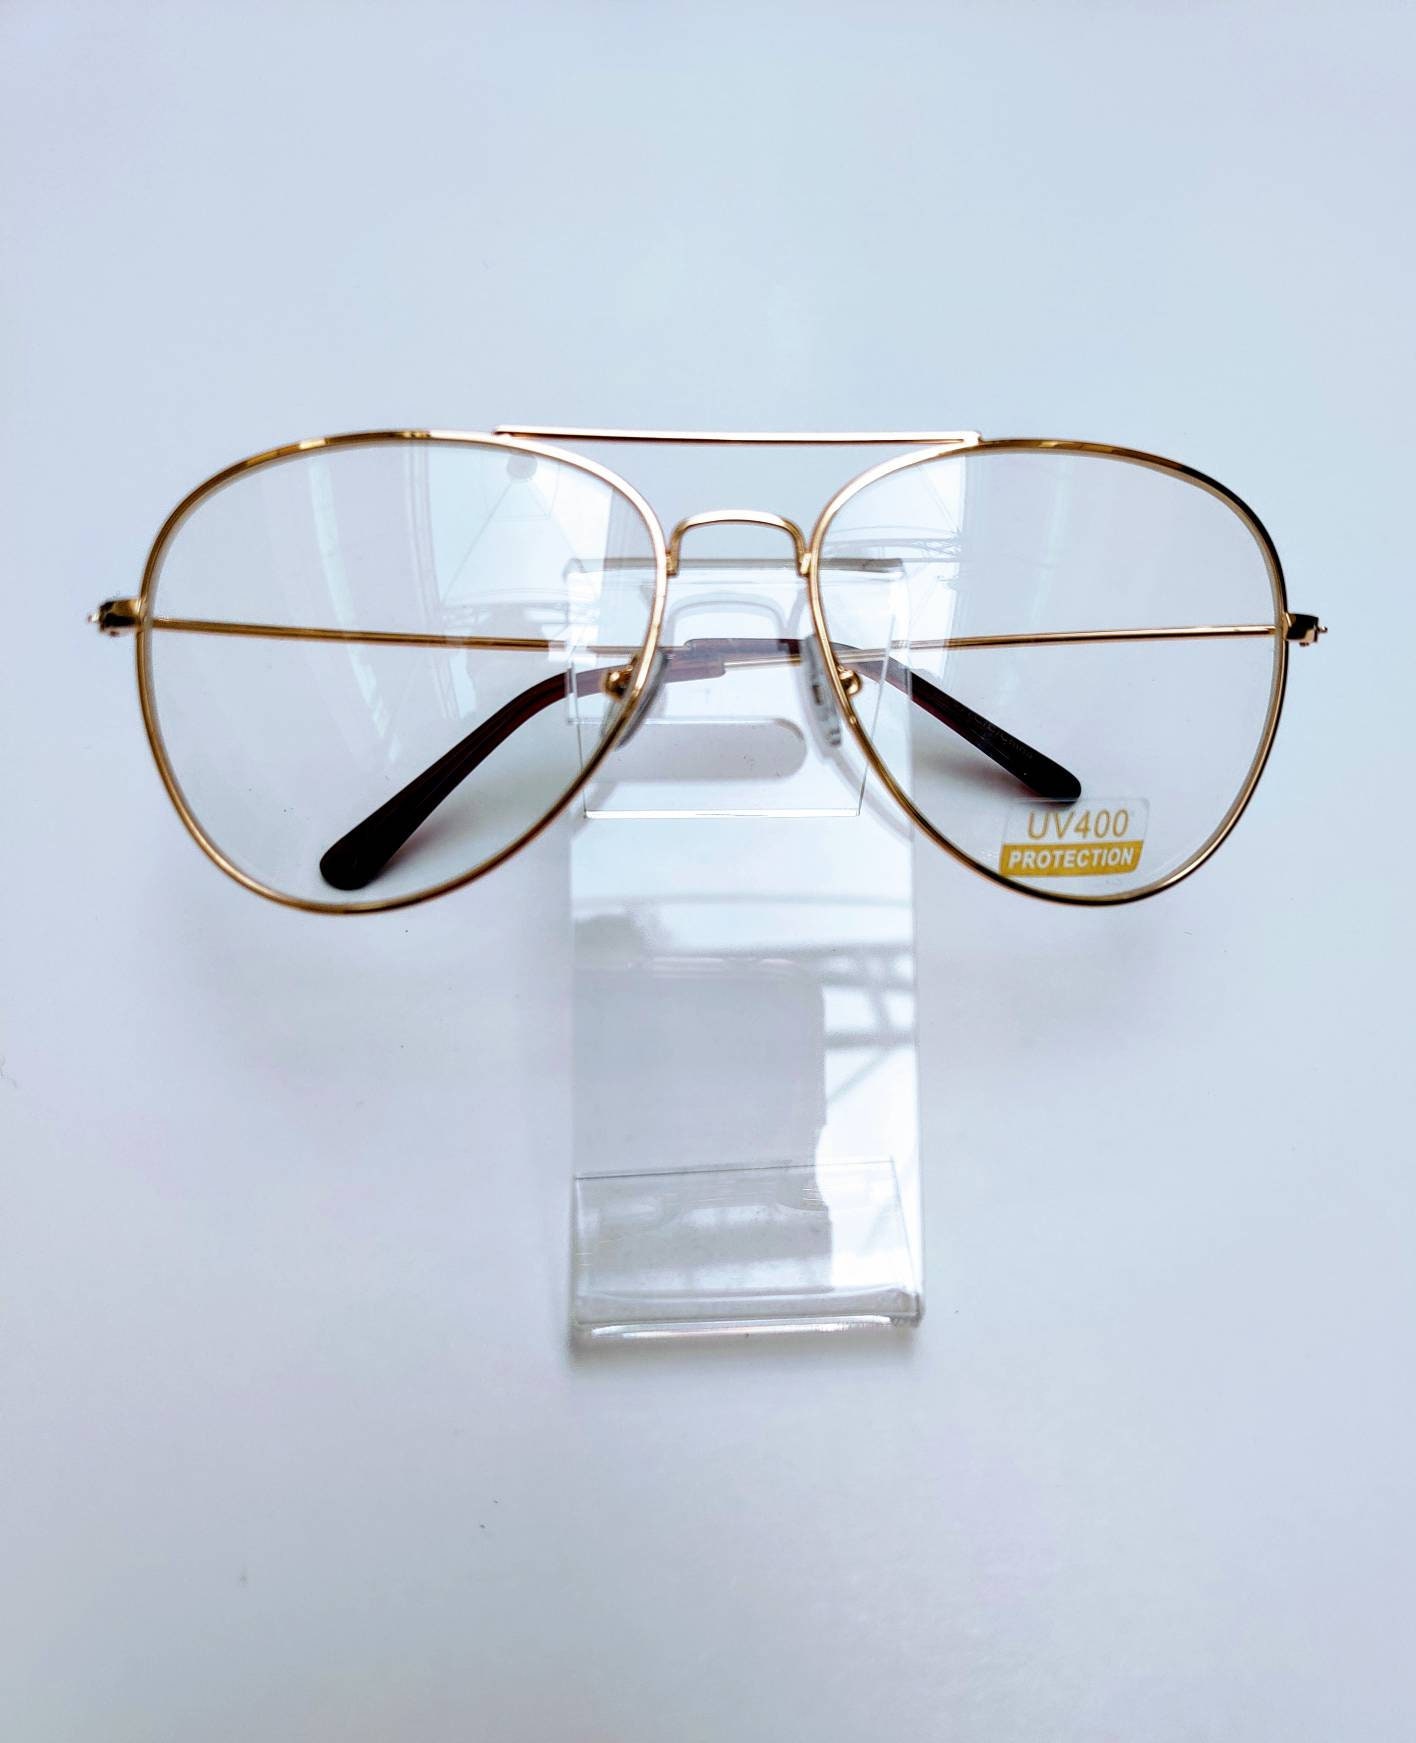 NULOOQ Fashion Vintage Square Non-prescription Clear Lens Glasses for Women  Men, Thick Frame Fake Eyeglasses (Black + Transparent) - 2 Pack at   Women's Clothing store